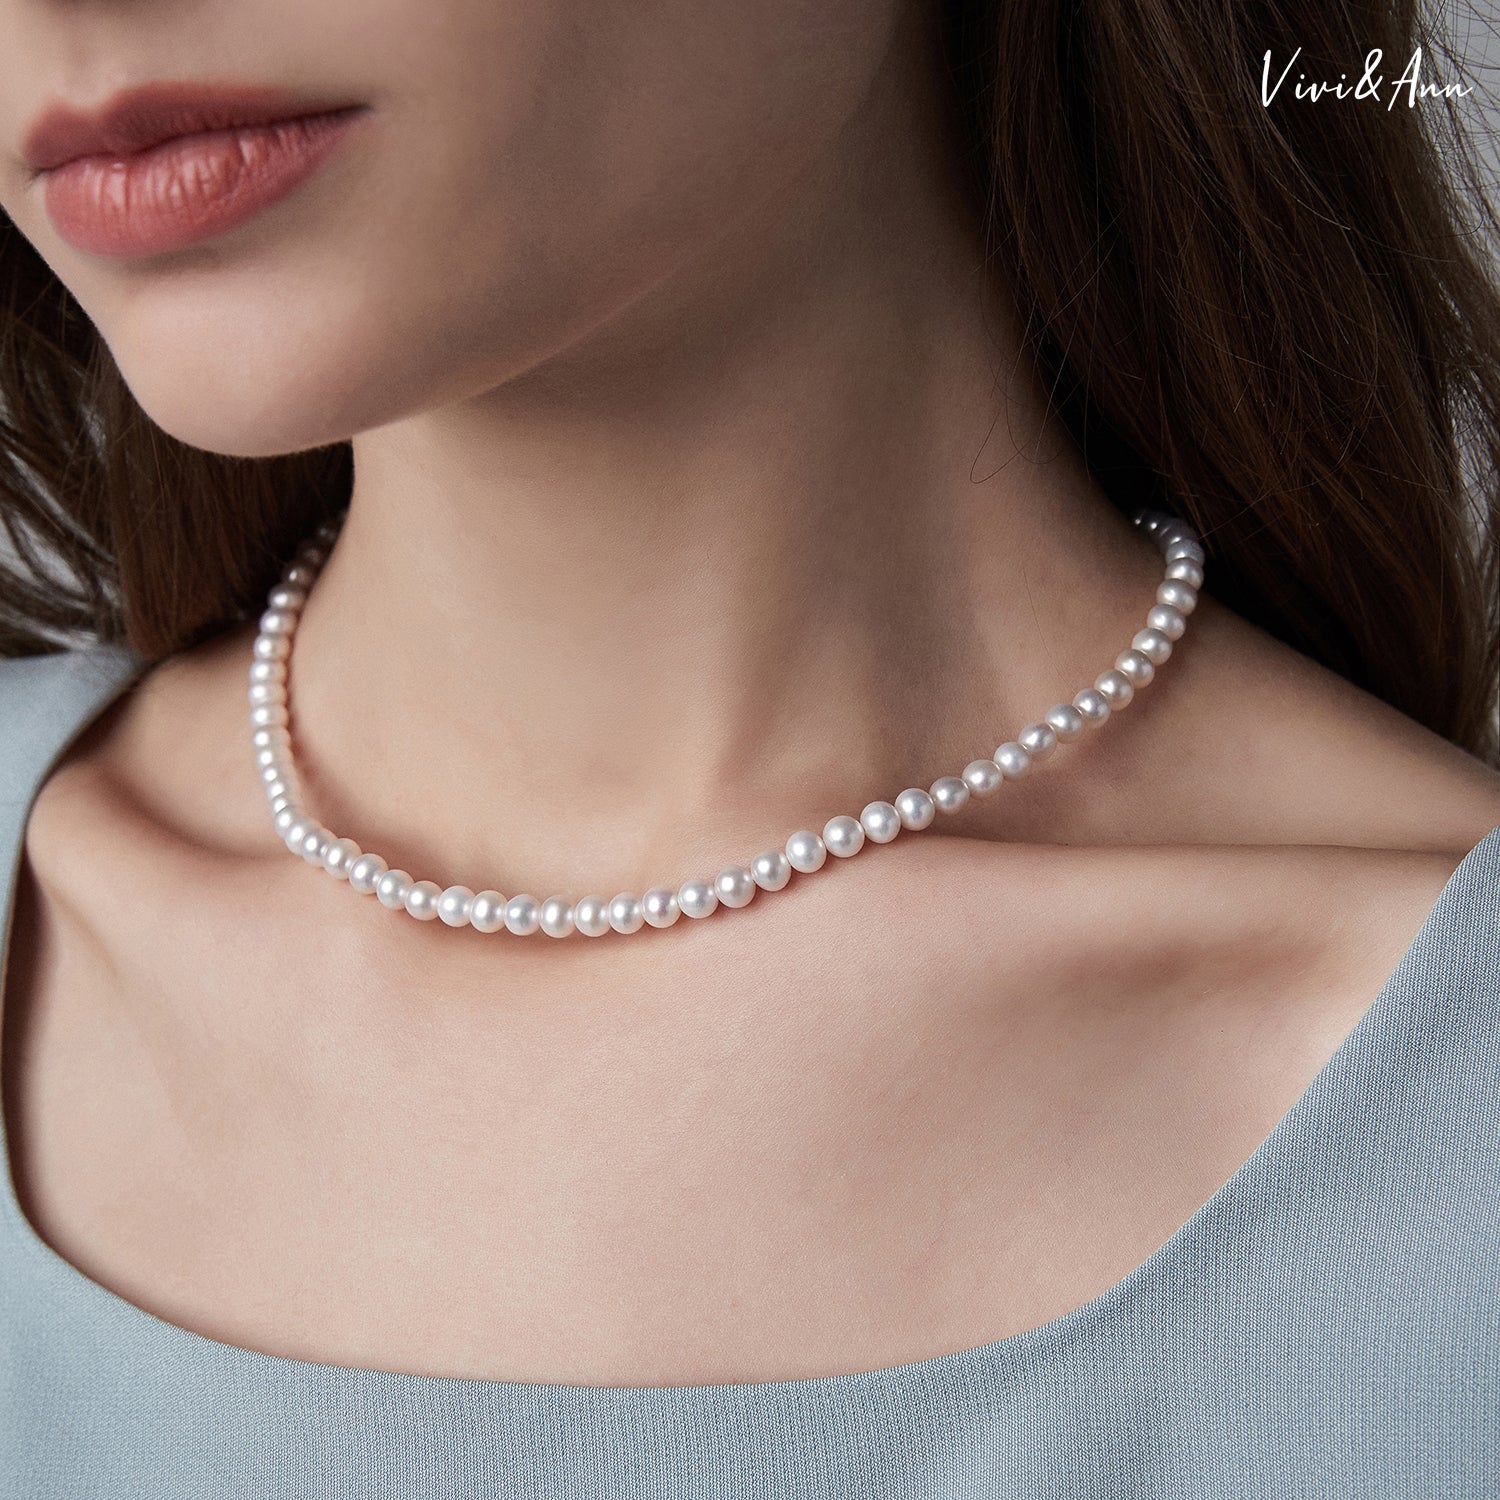 Leather & Pearl Choker Necklace: Handmade by Klara Haloho